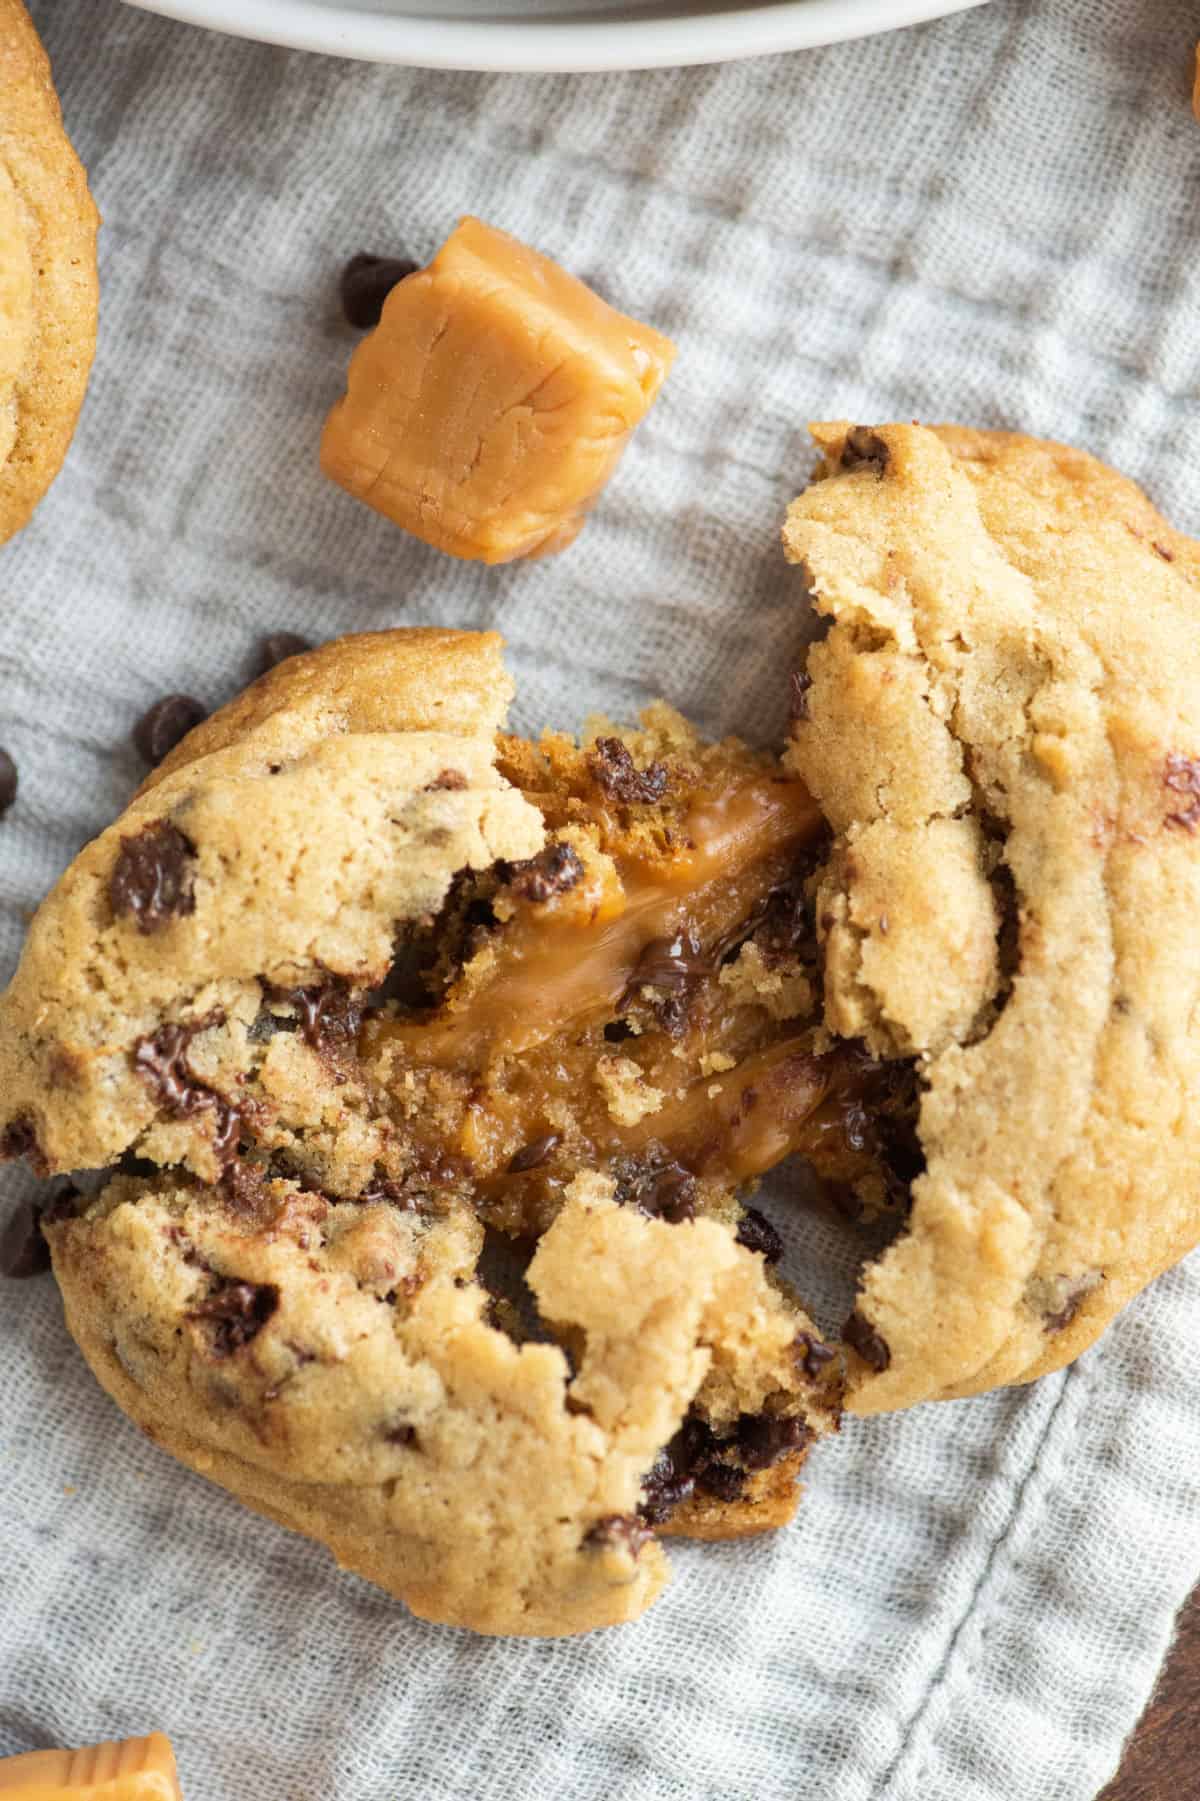 Caramel stuffed chocolate chip cookie broken in half to reveal gooey caramel center.